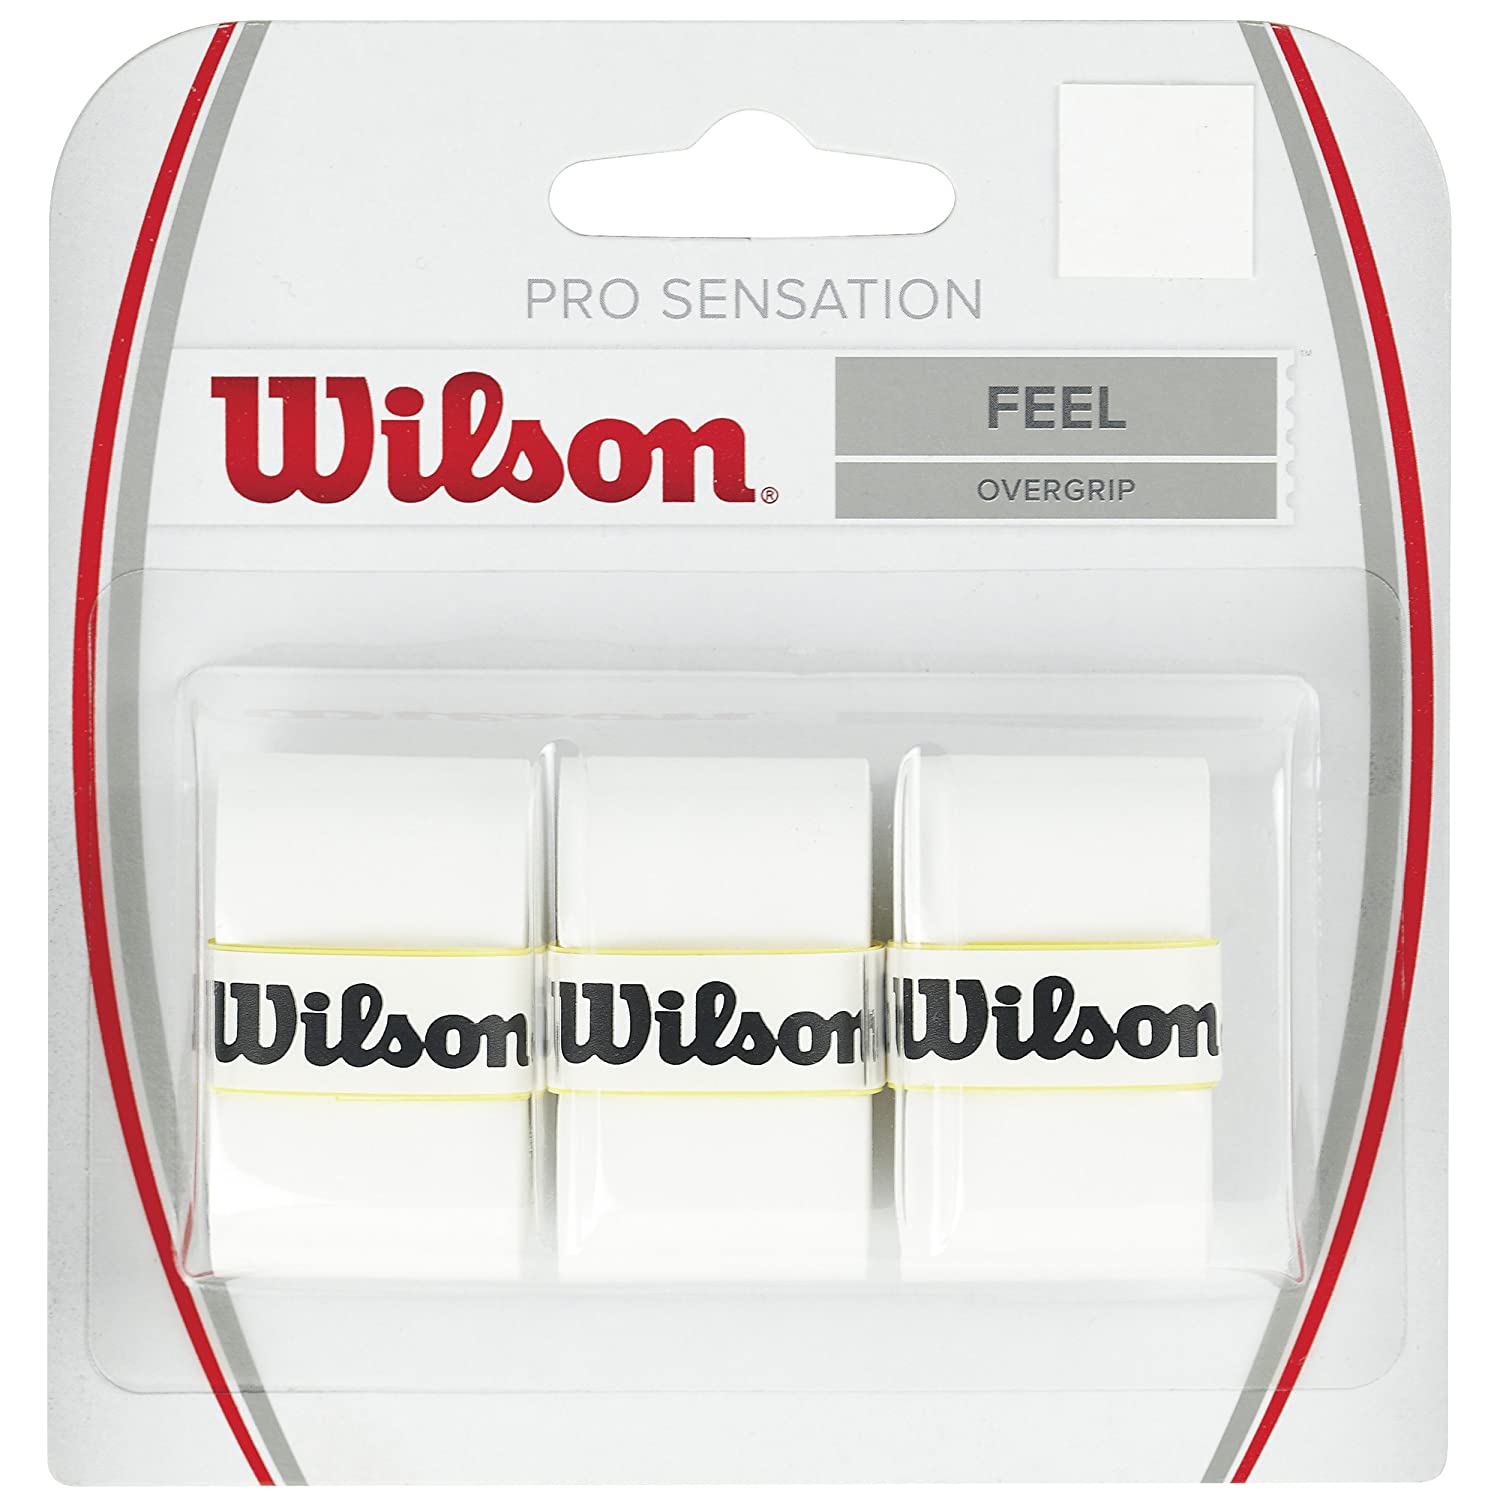 Wilson Pro Sensation Feel Tennis Racquet Over Grip - Best Price online Prokicksports.com